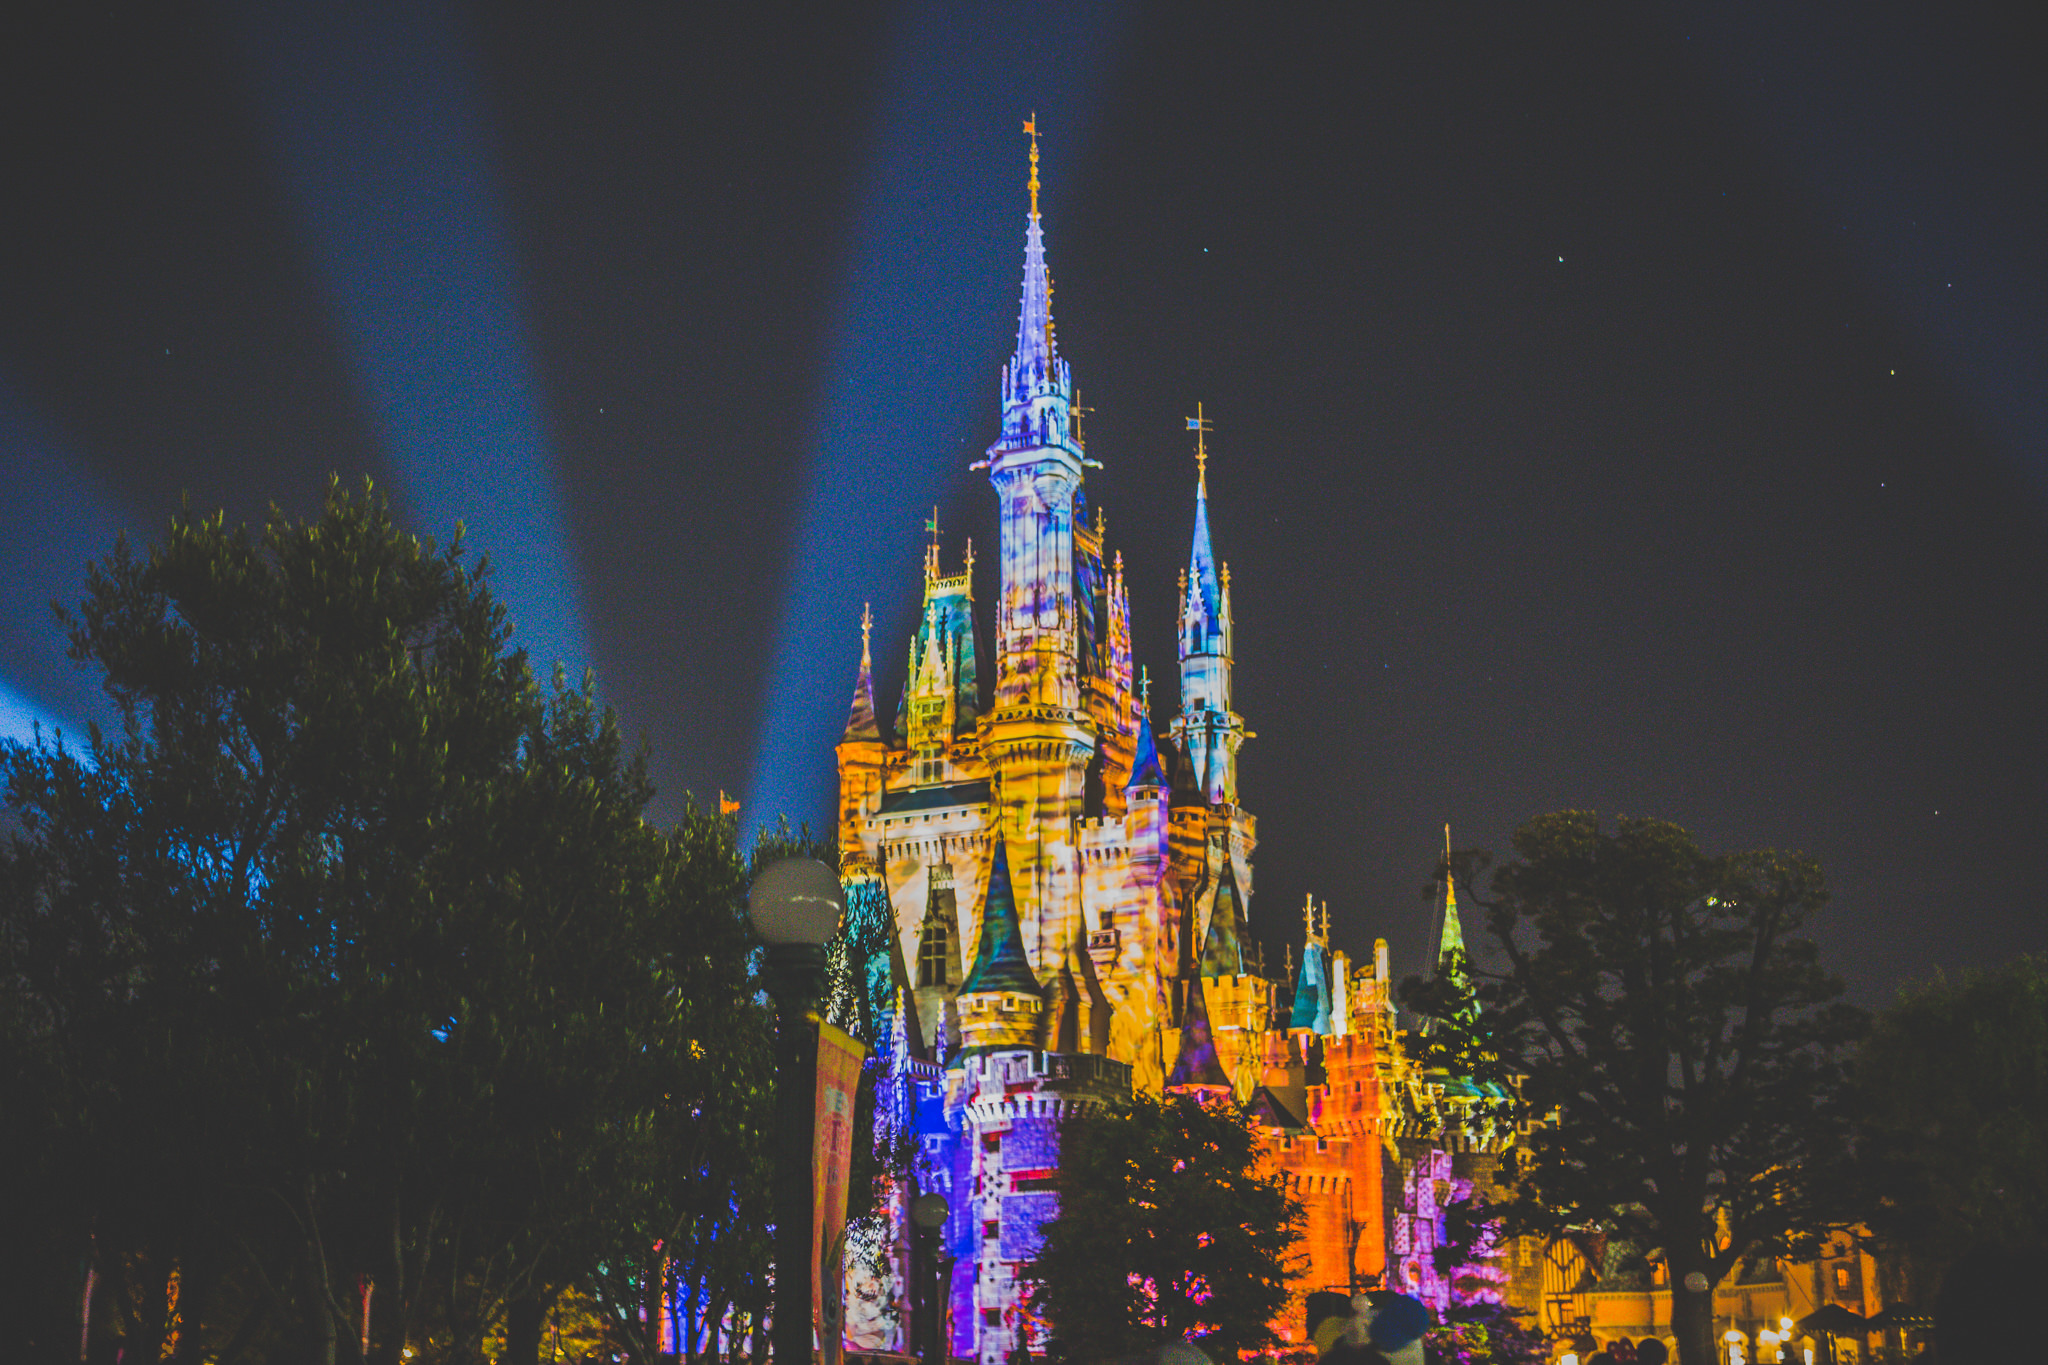 Toky Disneyland Castle by night - Travel photos